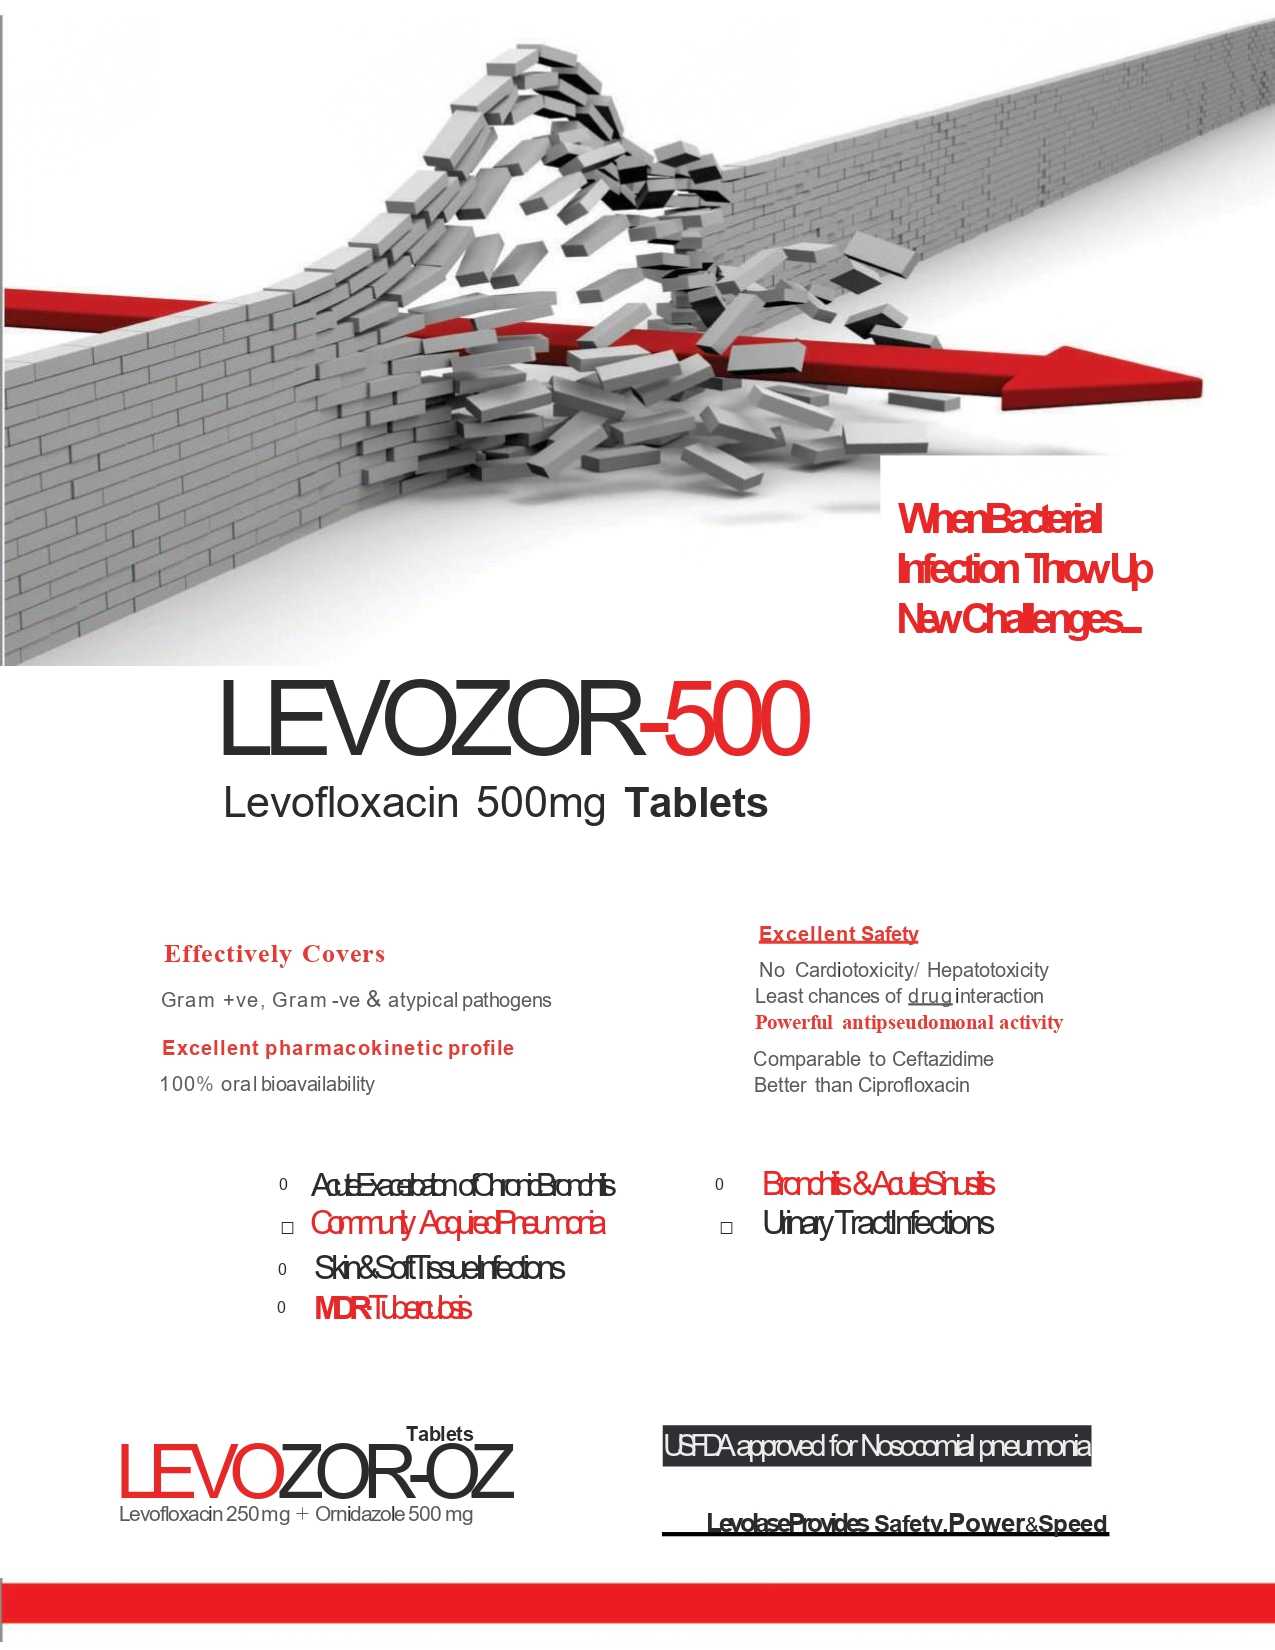 Levozor-500